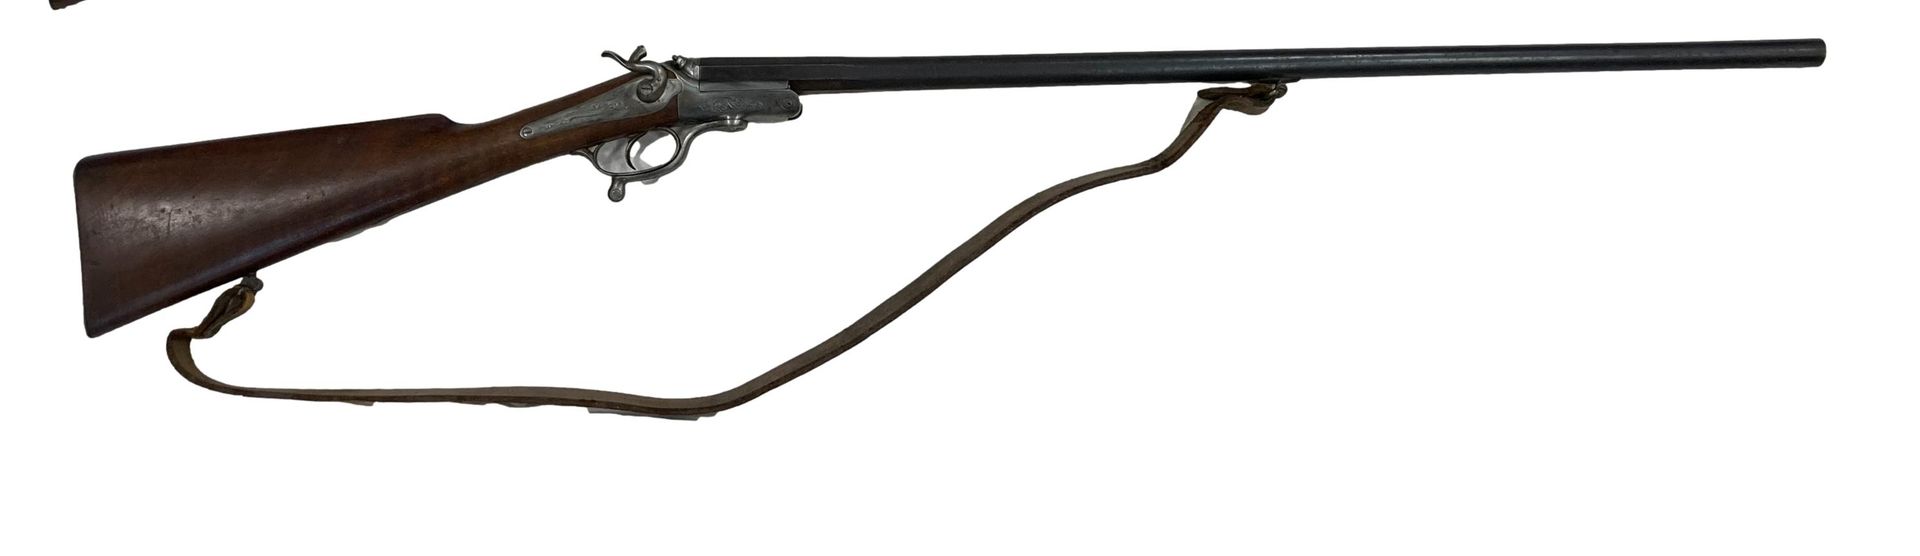 Null Warnant系统步枪
单发，后膛装弹。
圆形枪管和胡桃木枪托。
铁制配件。
总长度：108.5厘米
法国，约1890年。
D类武器
由Alban d&hellip;